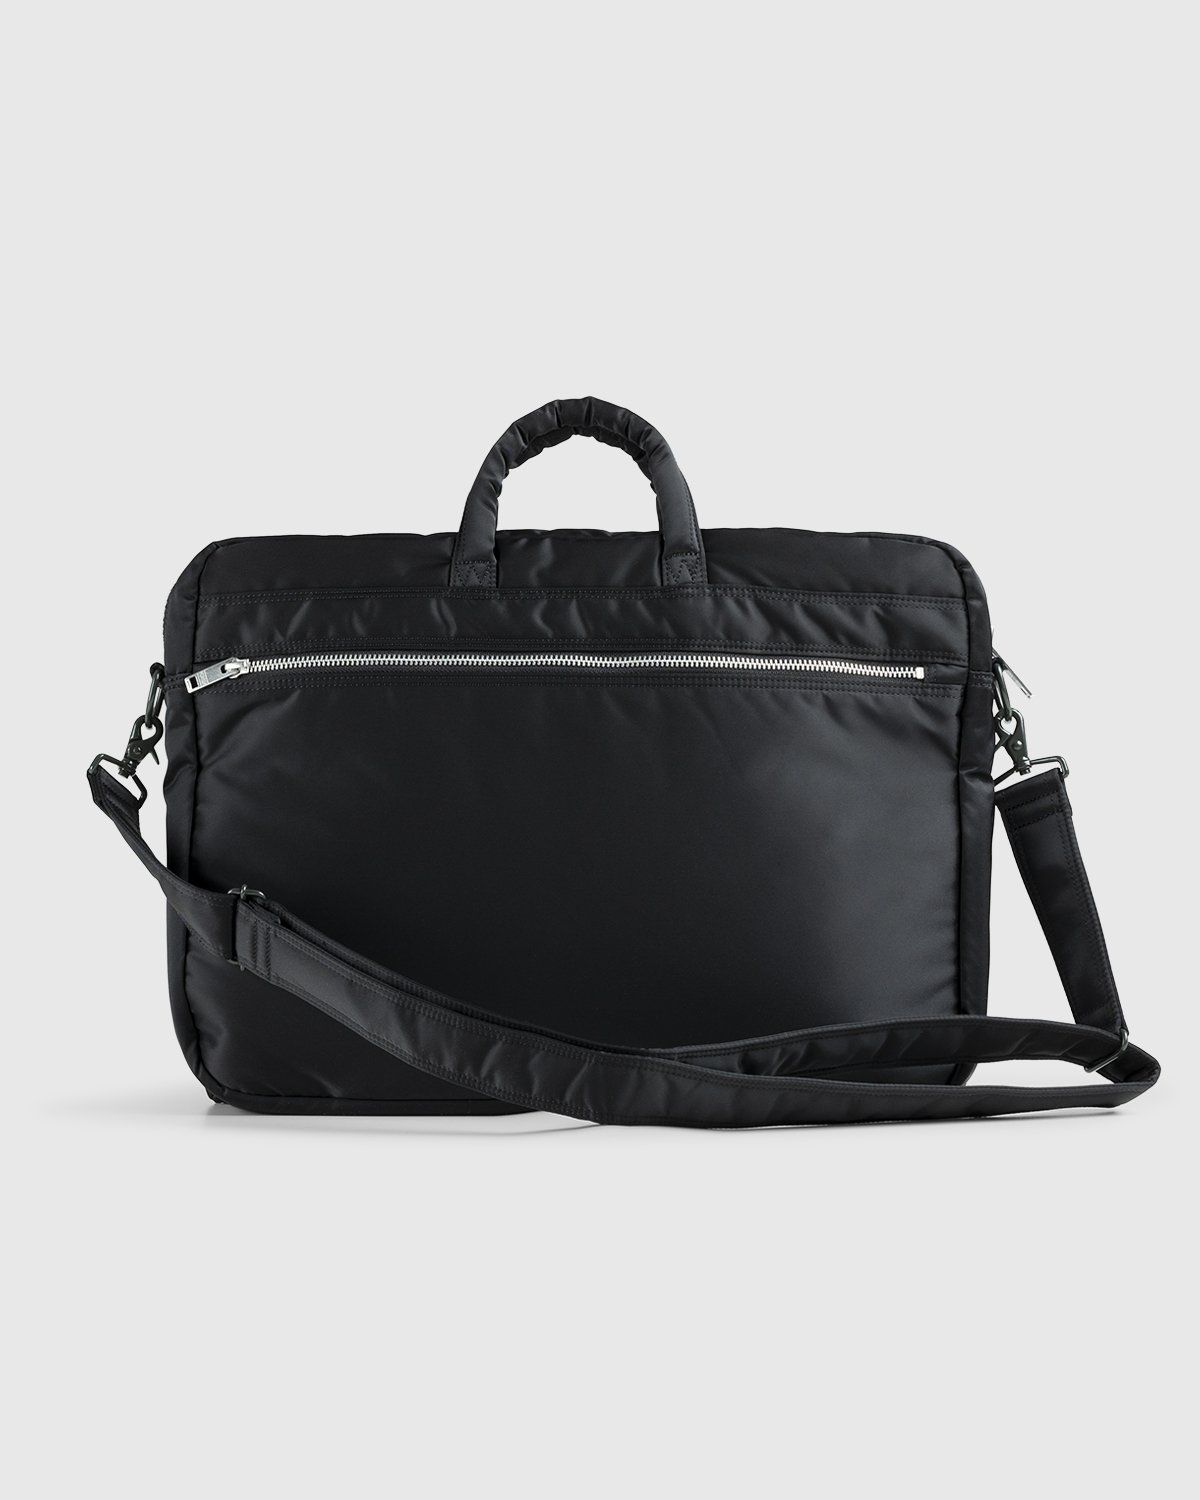 Porter-Yoshida & Co. – Tanker 2-Way Briefcase Black - Bags - Black - Image 2